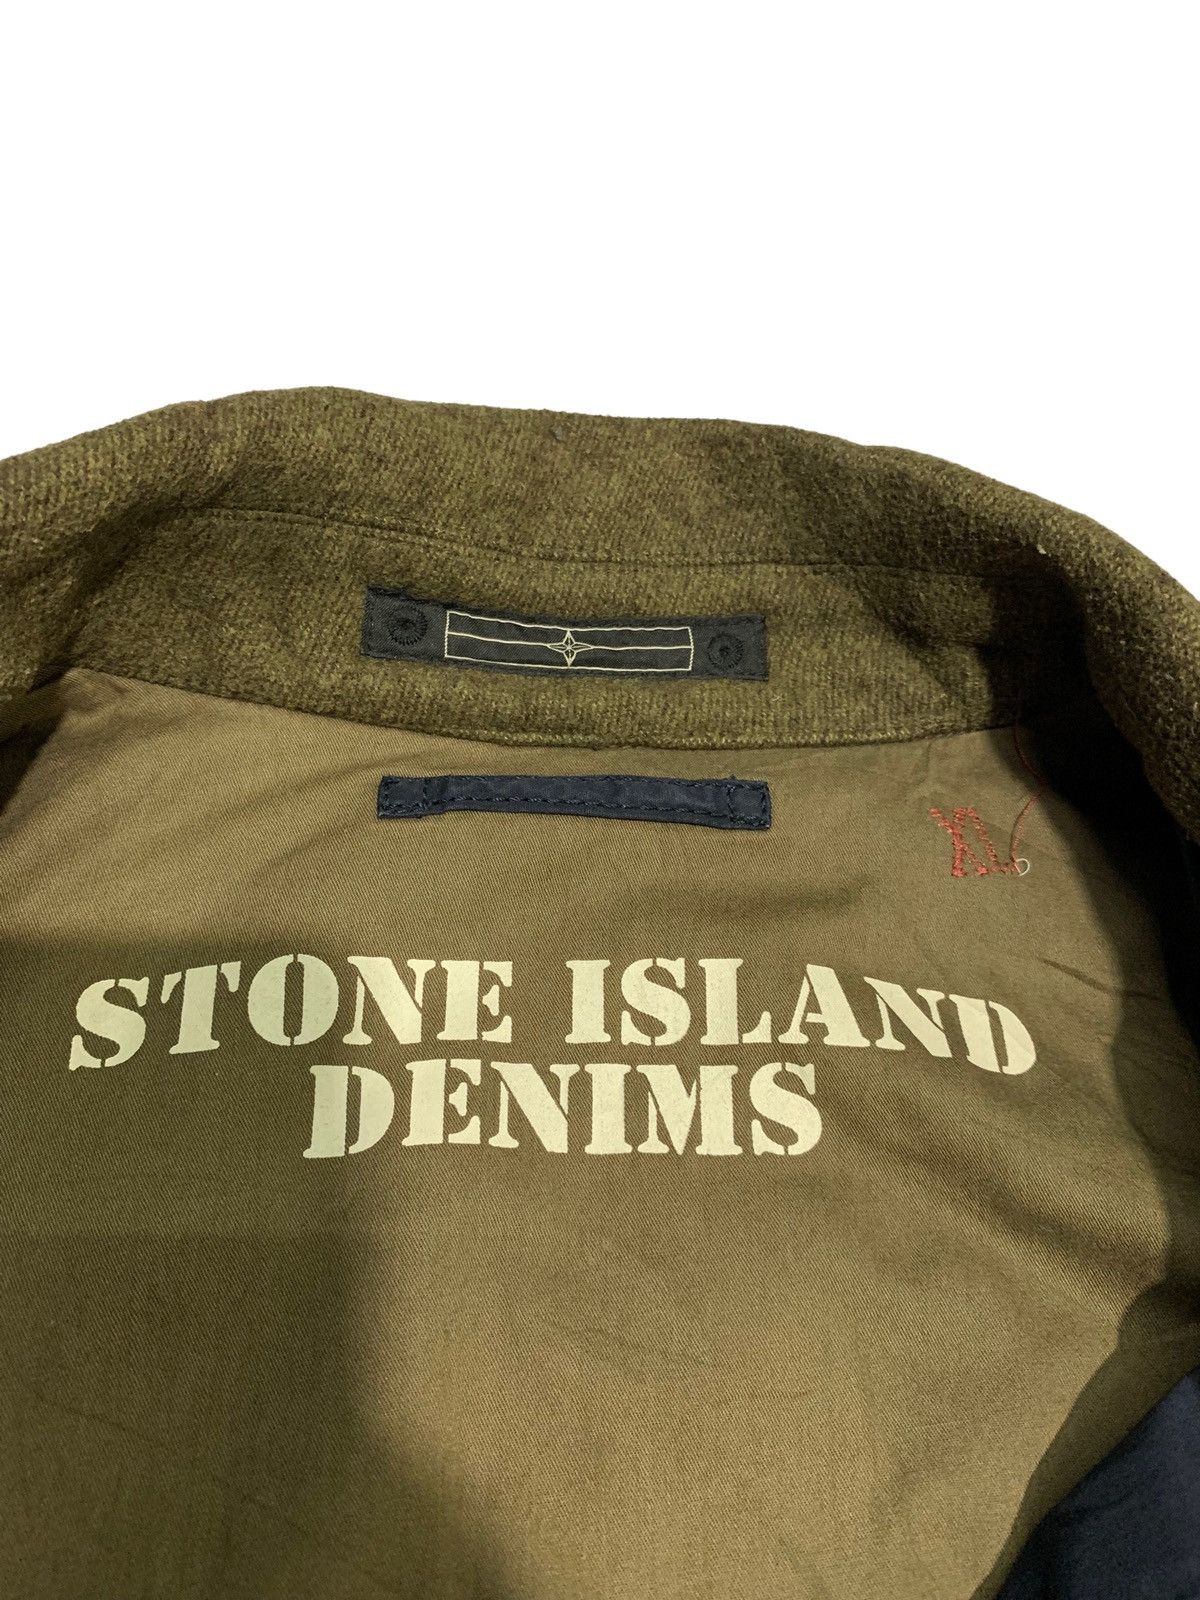 🔥STONE ISLAND DENIMS AW08 BOMBER JACKETS - 11